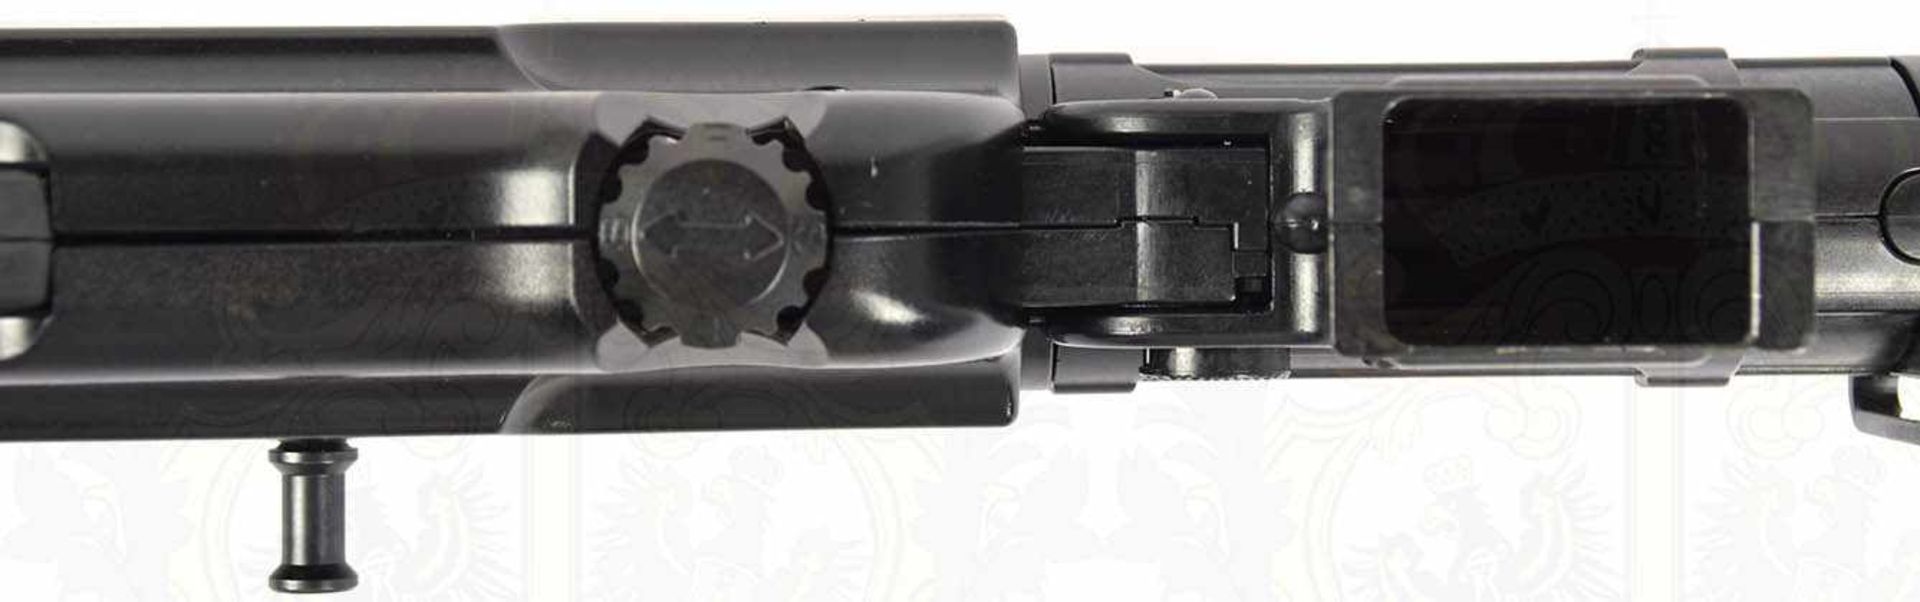 SELBSLADEBÜCHSE GSG MP 40, Kaliber 9x19mm, Hersteller GSG Made in Germany, Serien-Nr. A 761976, - Image 6 of 12